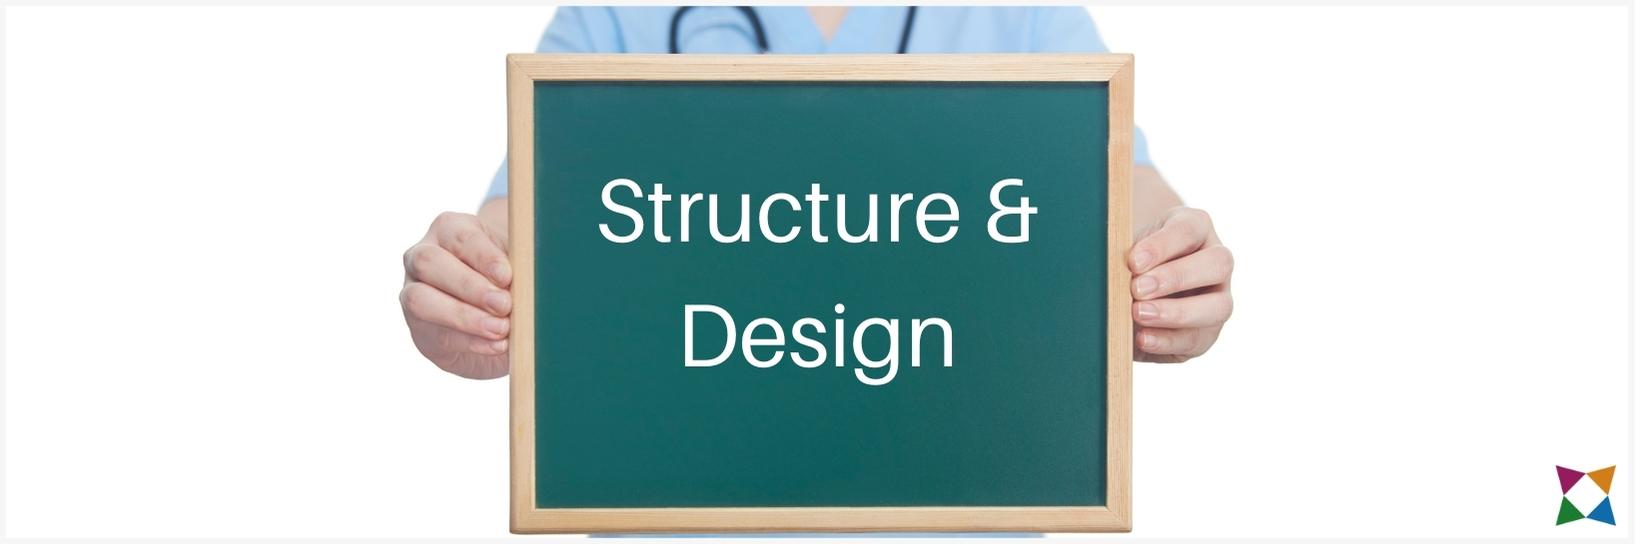 nha-aes-structure-design-anatomy